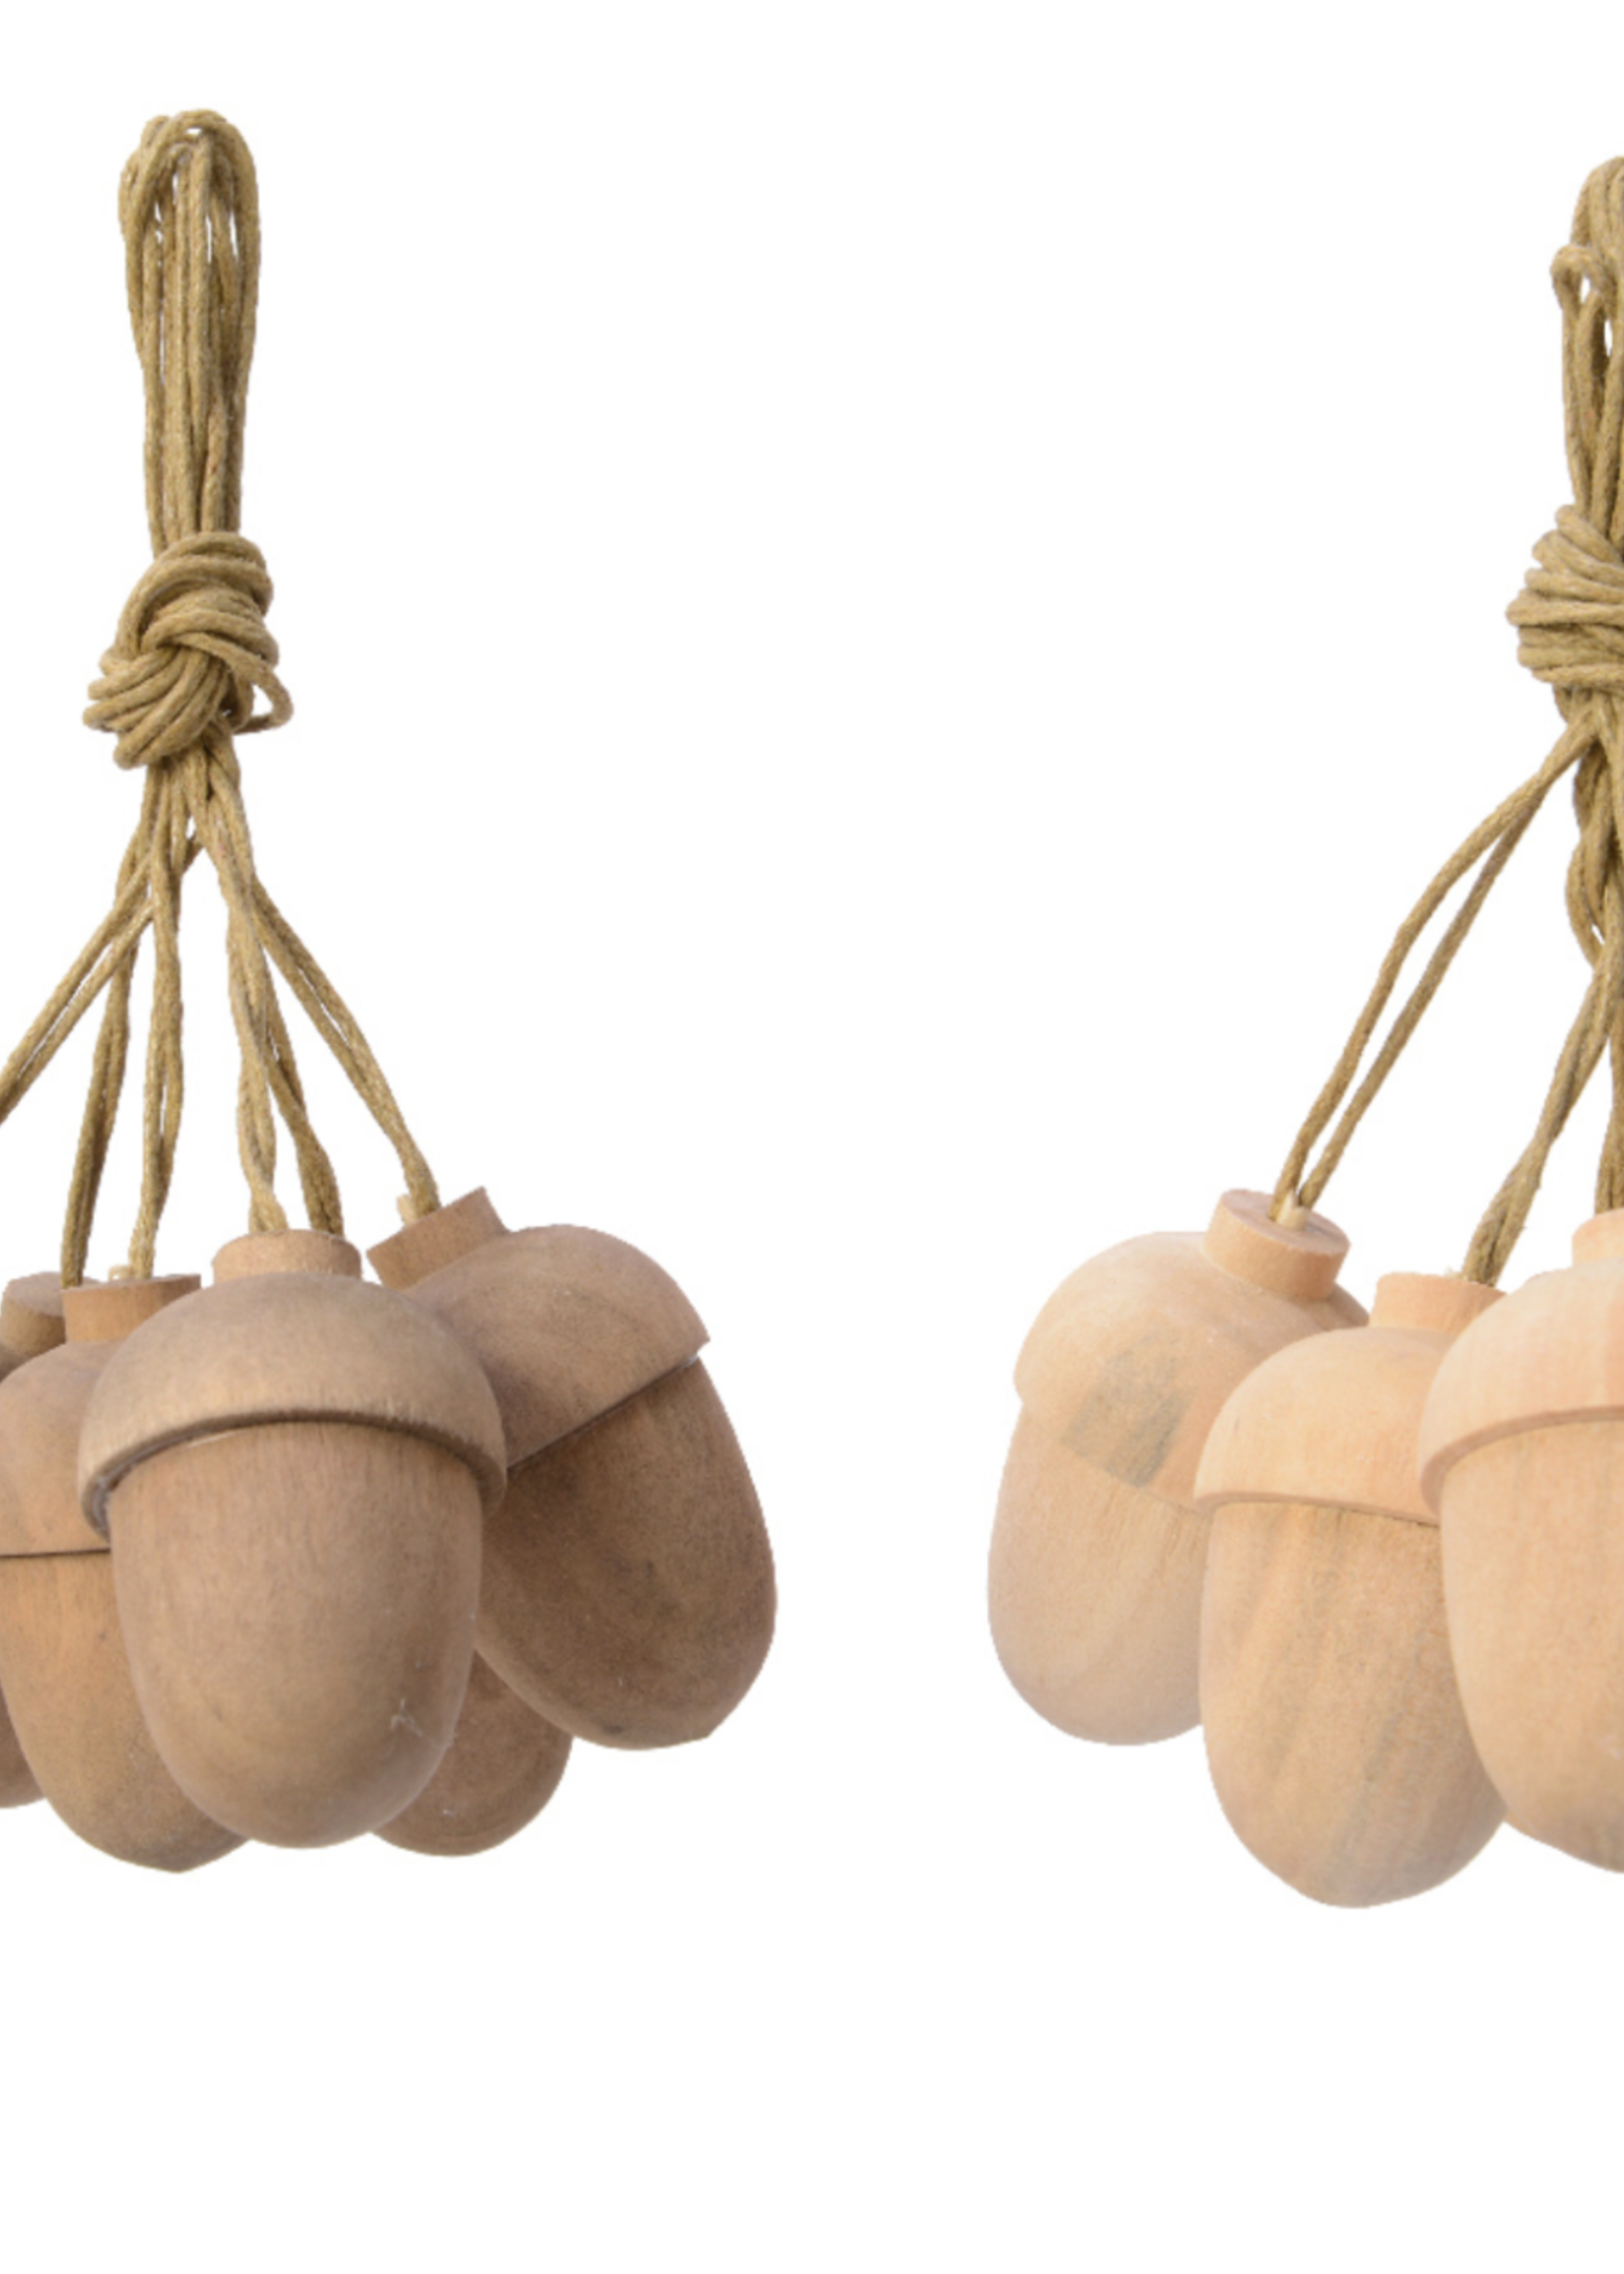 Decoris Wooden Hanging Acorns Set of 6 - 2 Designs